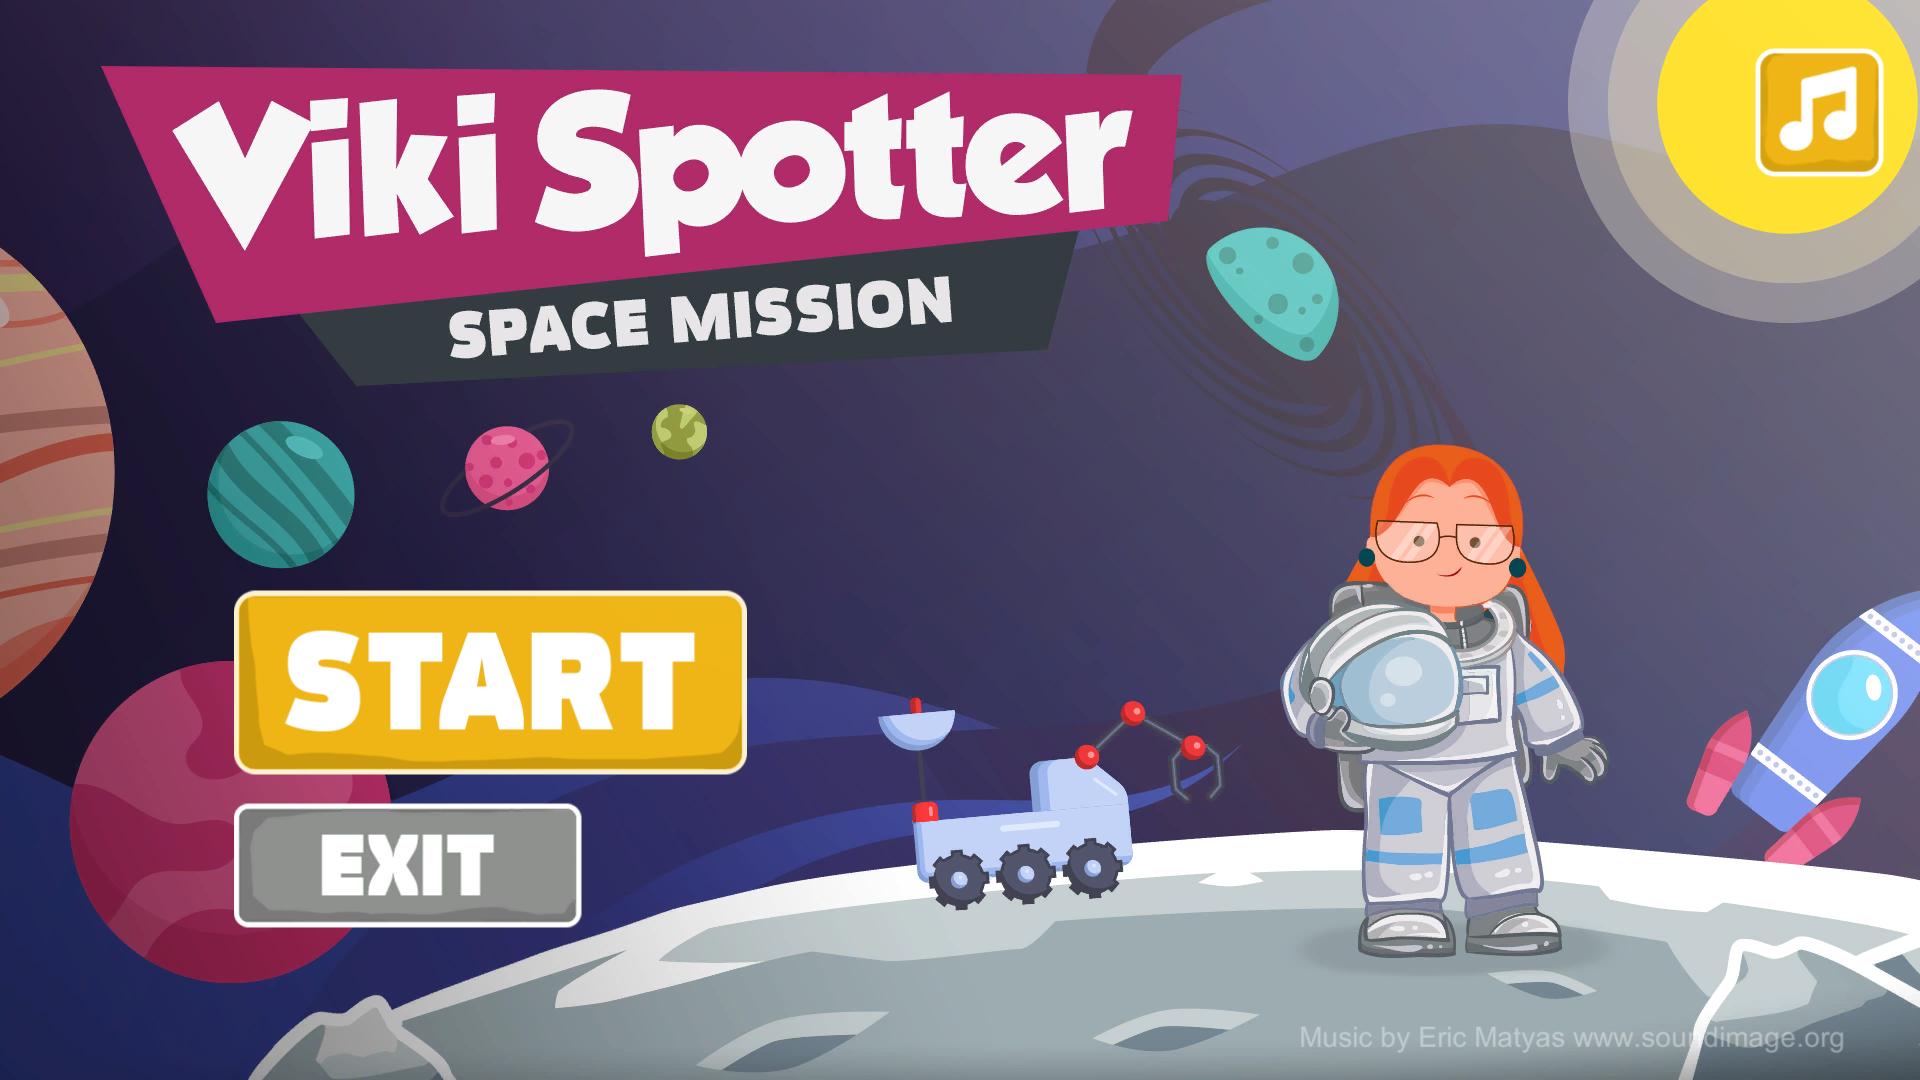 [$ 0.73] Viki Spotter: Space Mission Steam CD Key